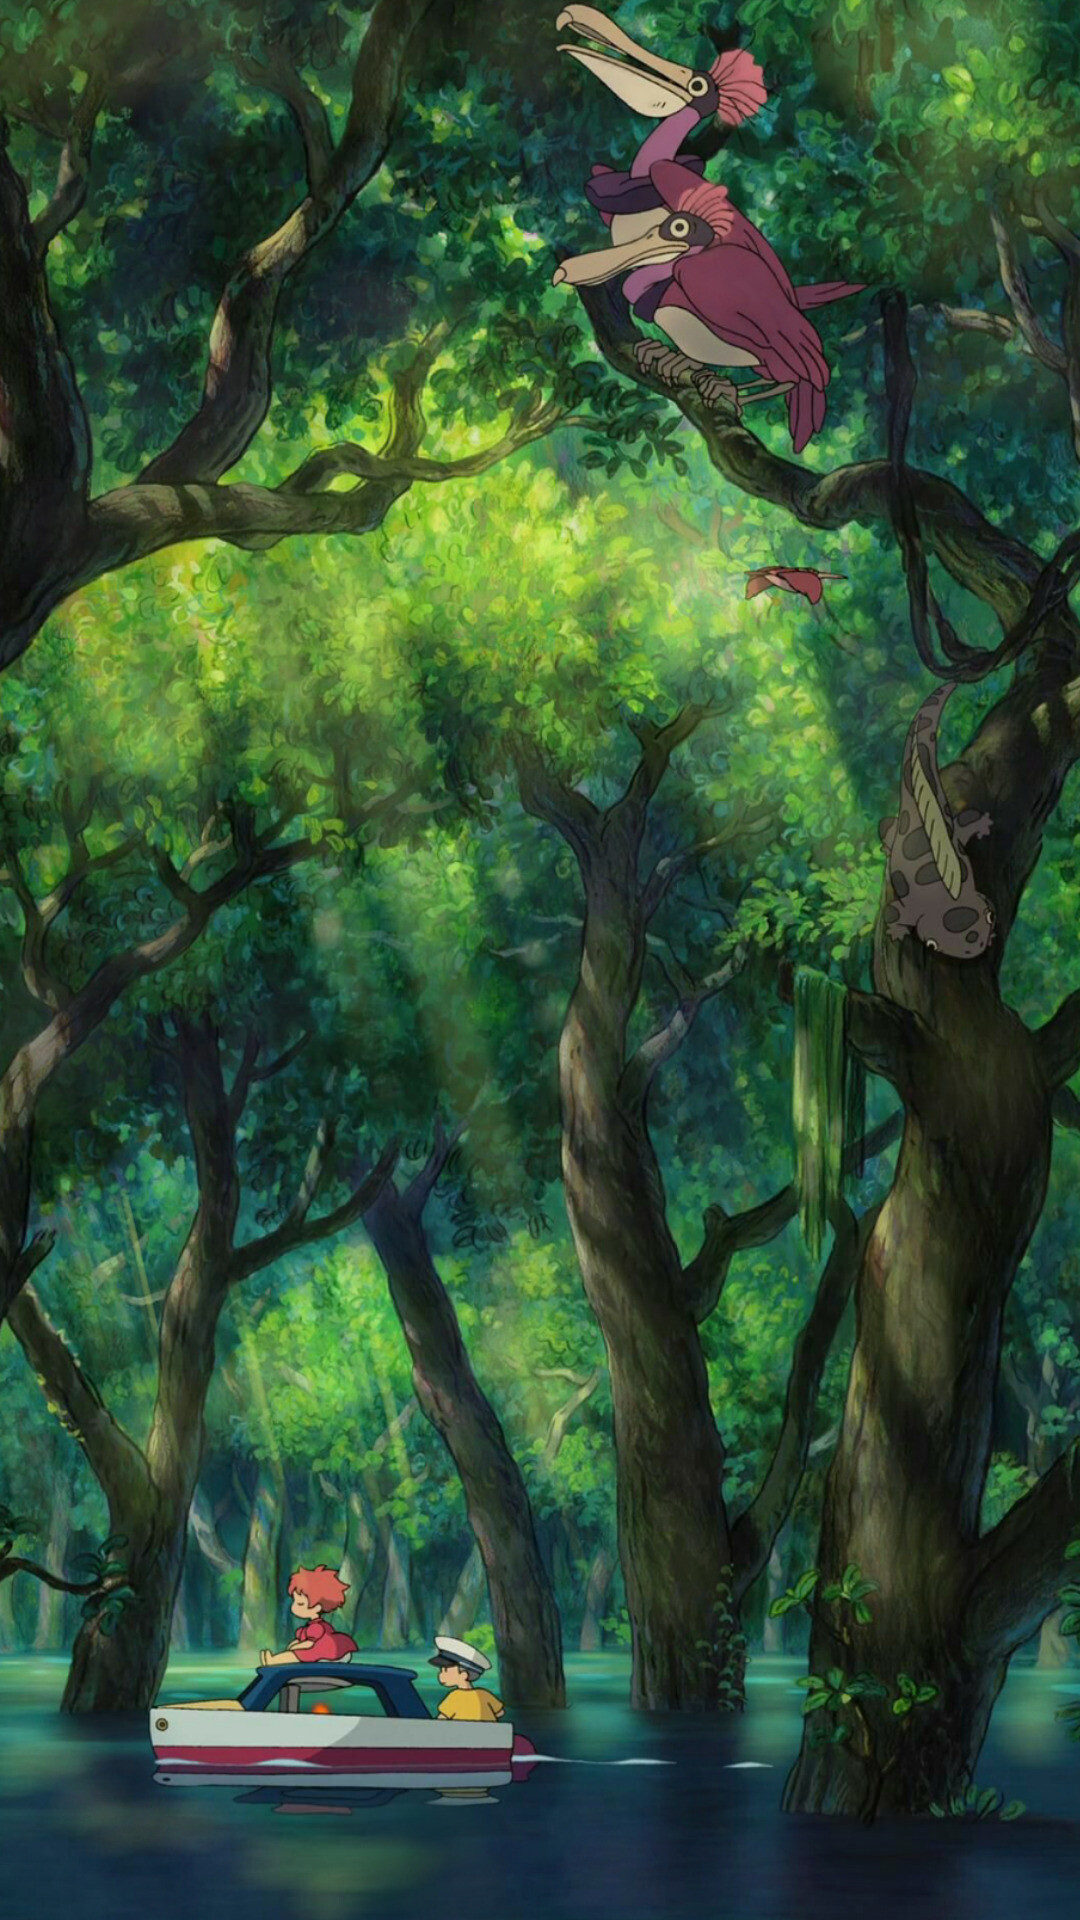 HD wallpaper, Ponyo On The Cliff By The Sea, 1080X1920 Full Hd Phone, Mobile 1080P Studio Ghibli Background Image, Studio Ghibli